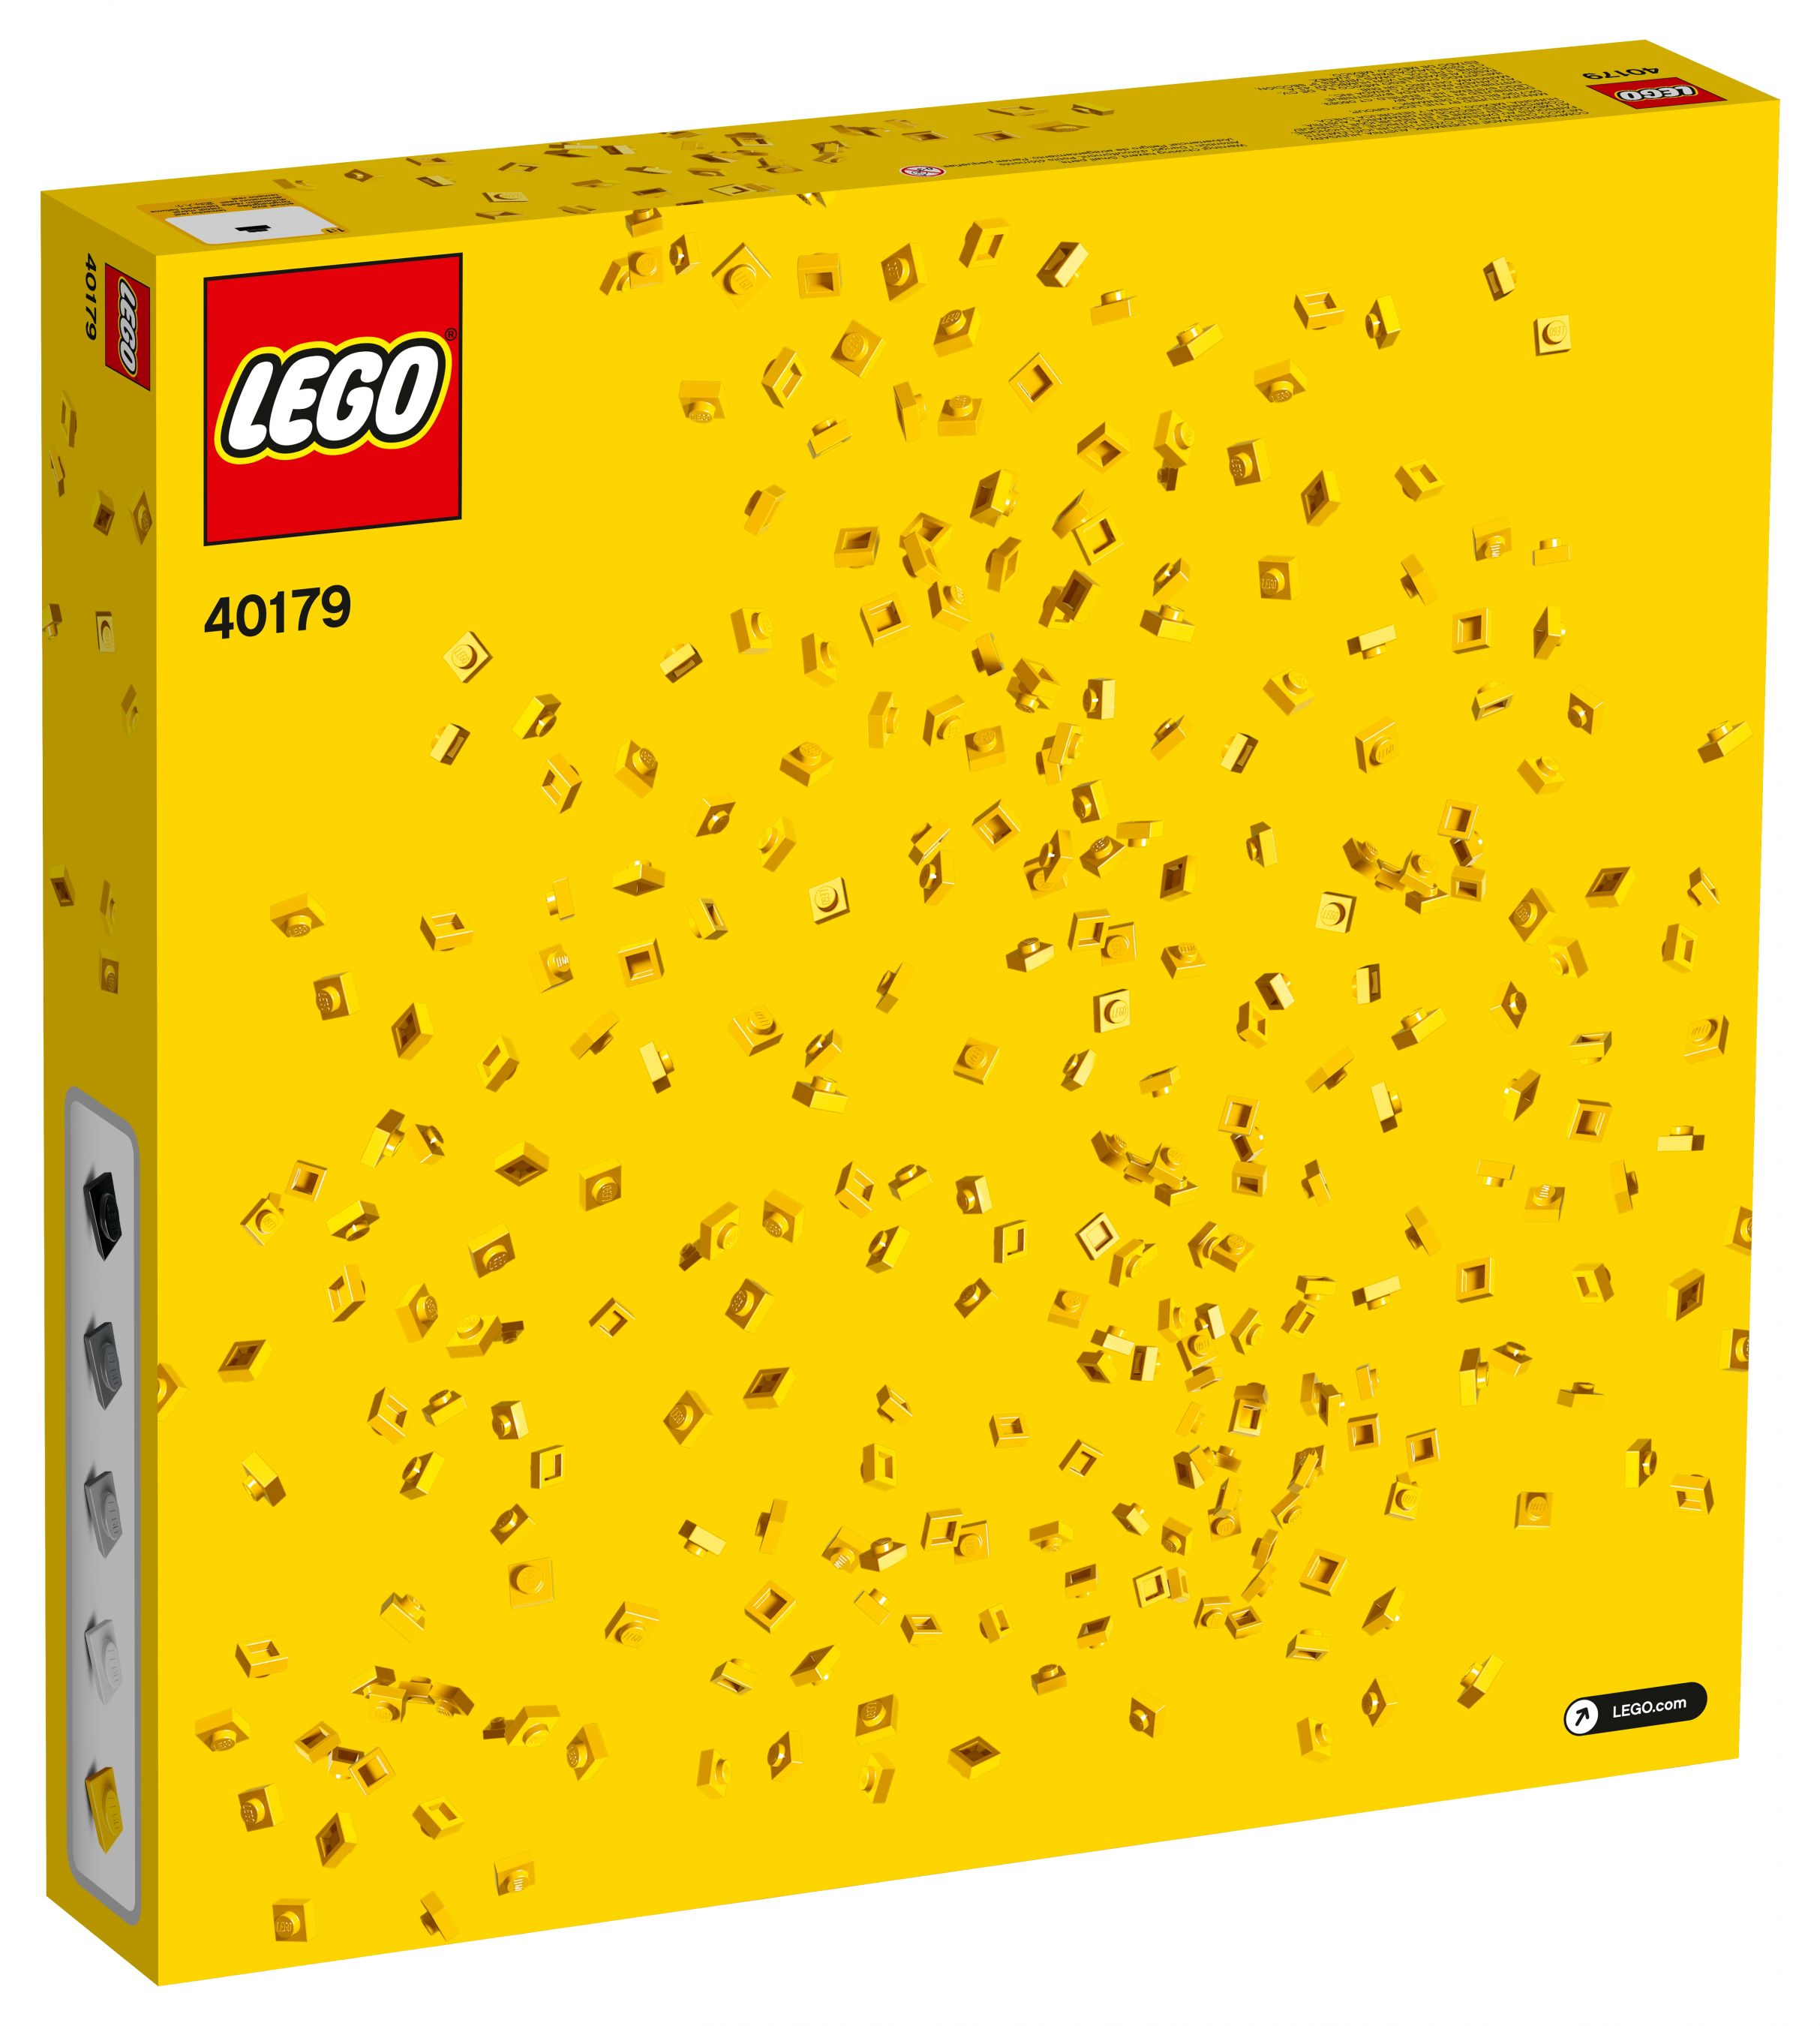 LEGO Miscellaneous 40179 Personalised Mosaic Portrait LEGO_40179_alt1.jpg